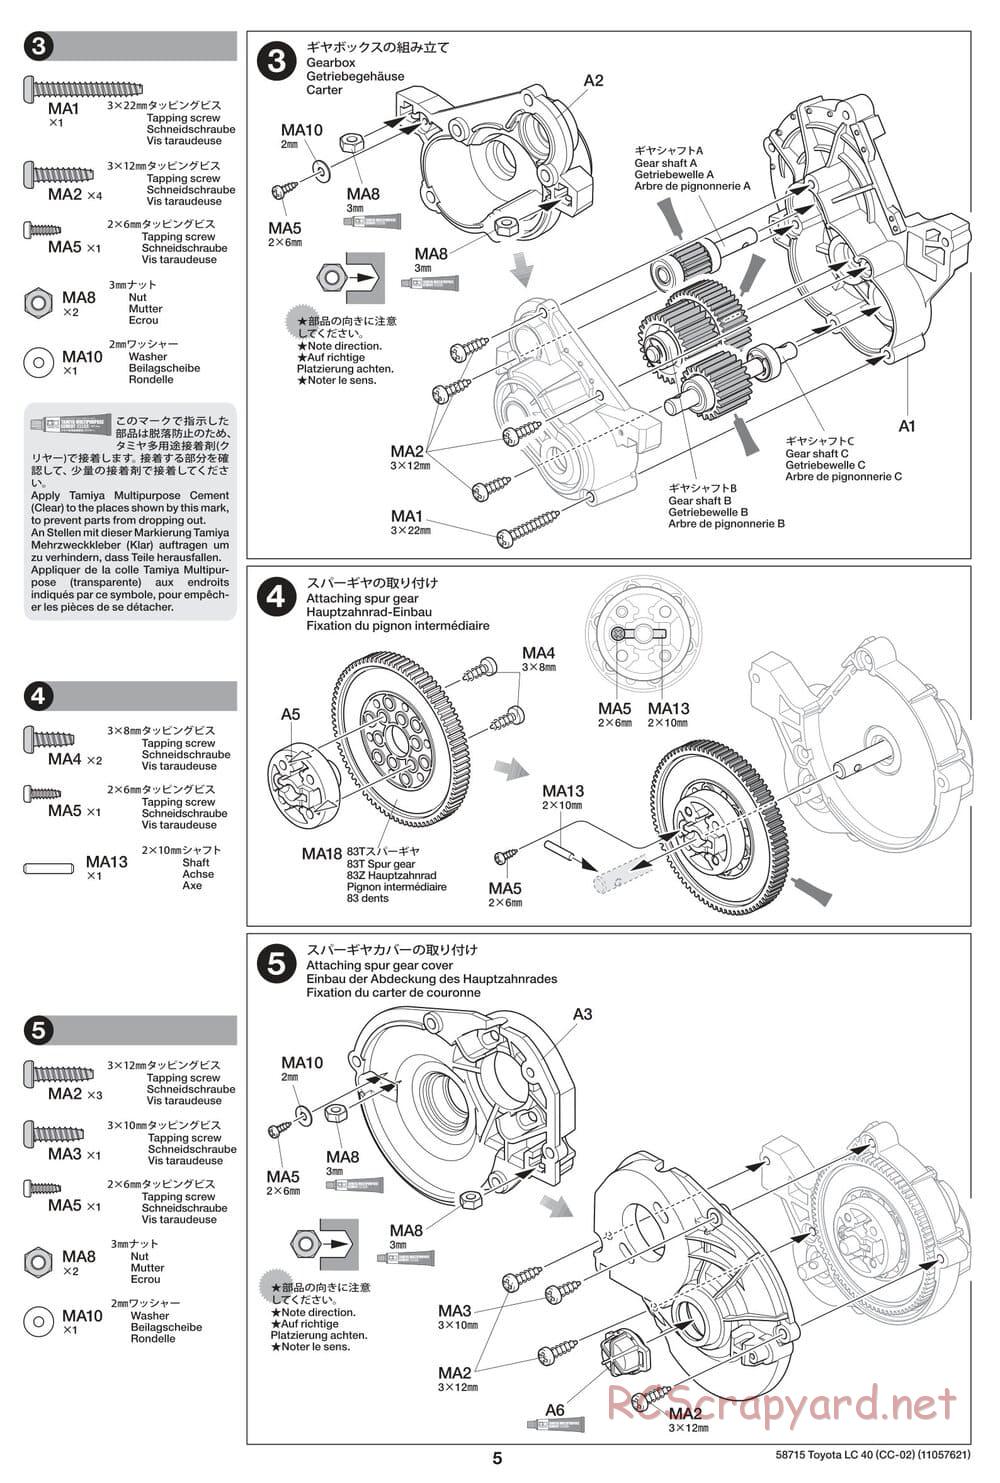 Tamiya - Toyota Land Cruiser 40 - CC-02 Chassis - Manual - Page 5